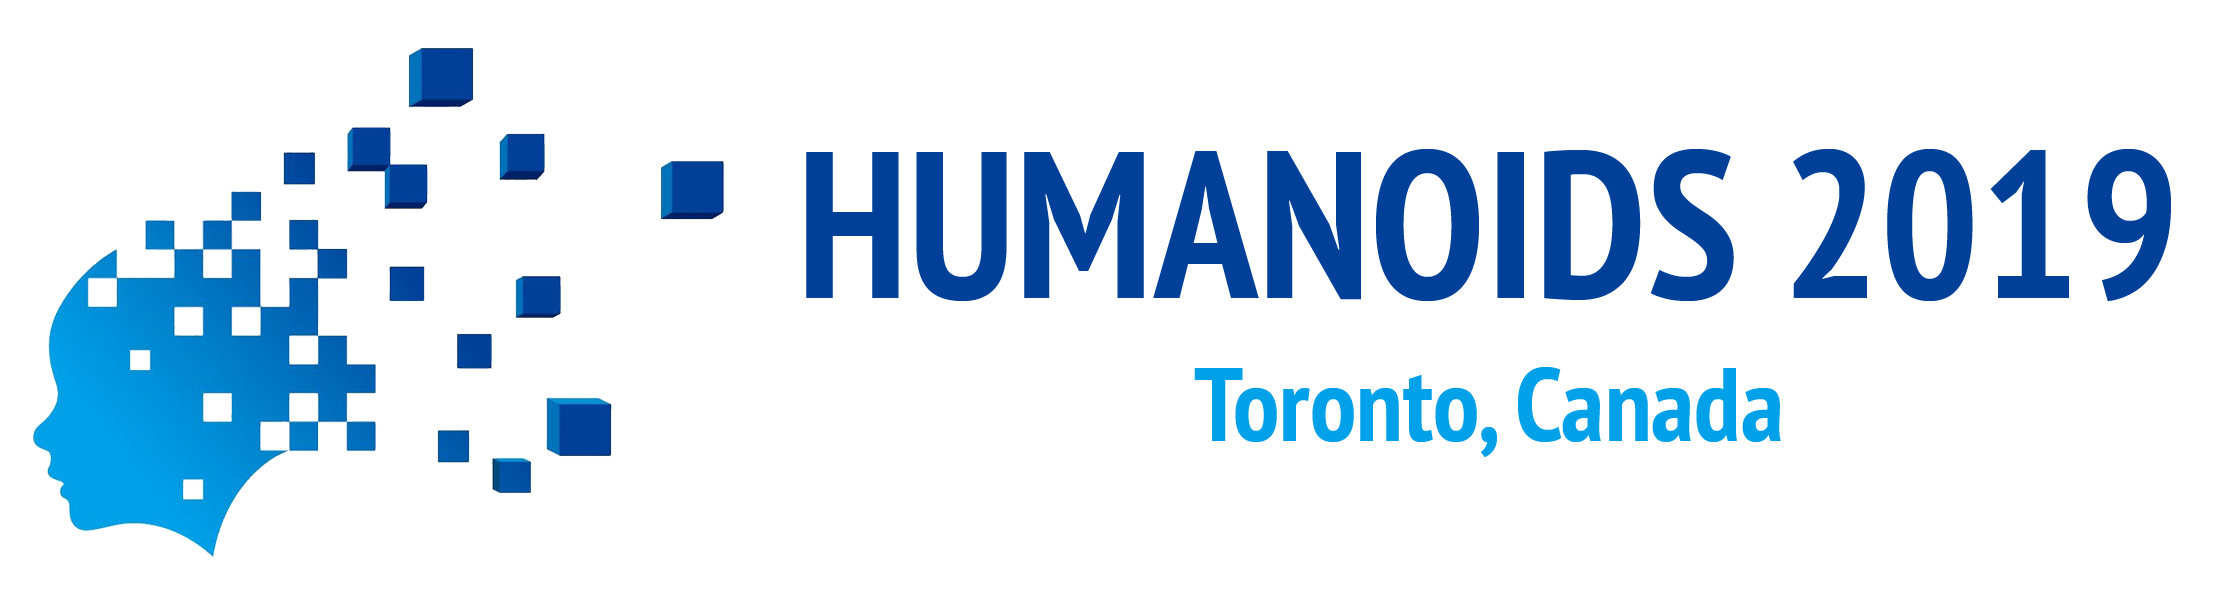 Humanoids 2019